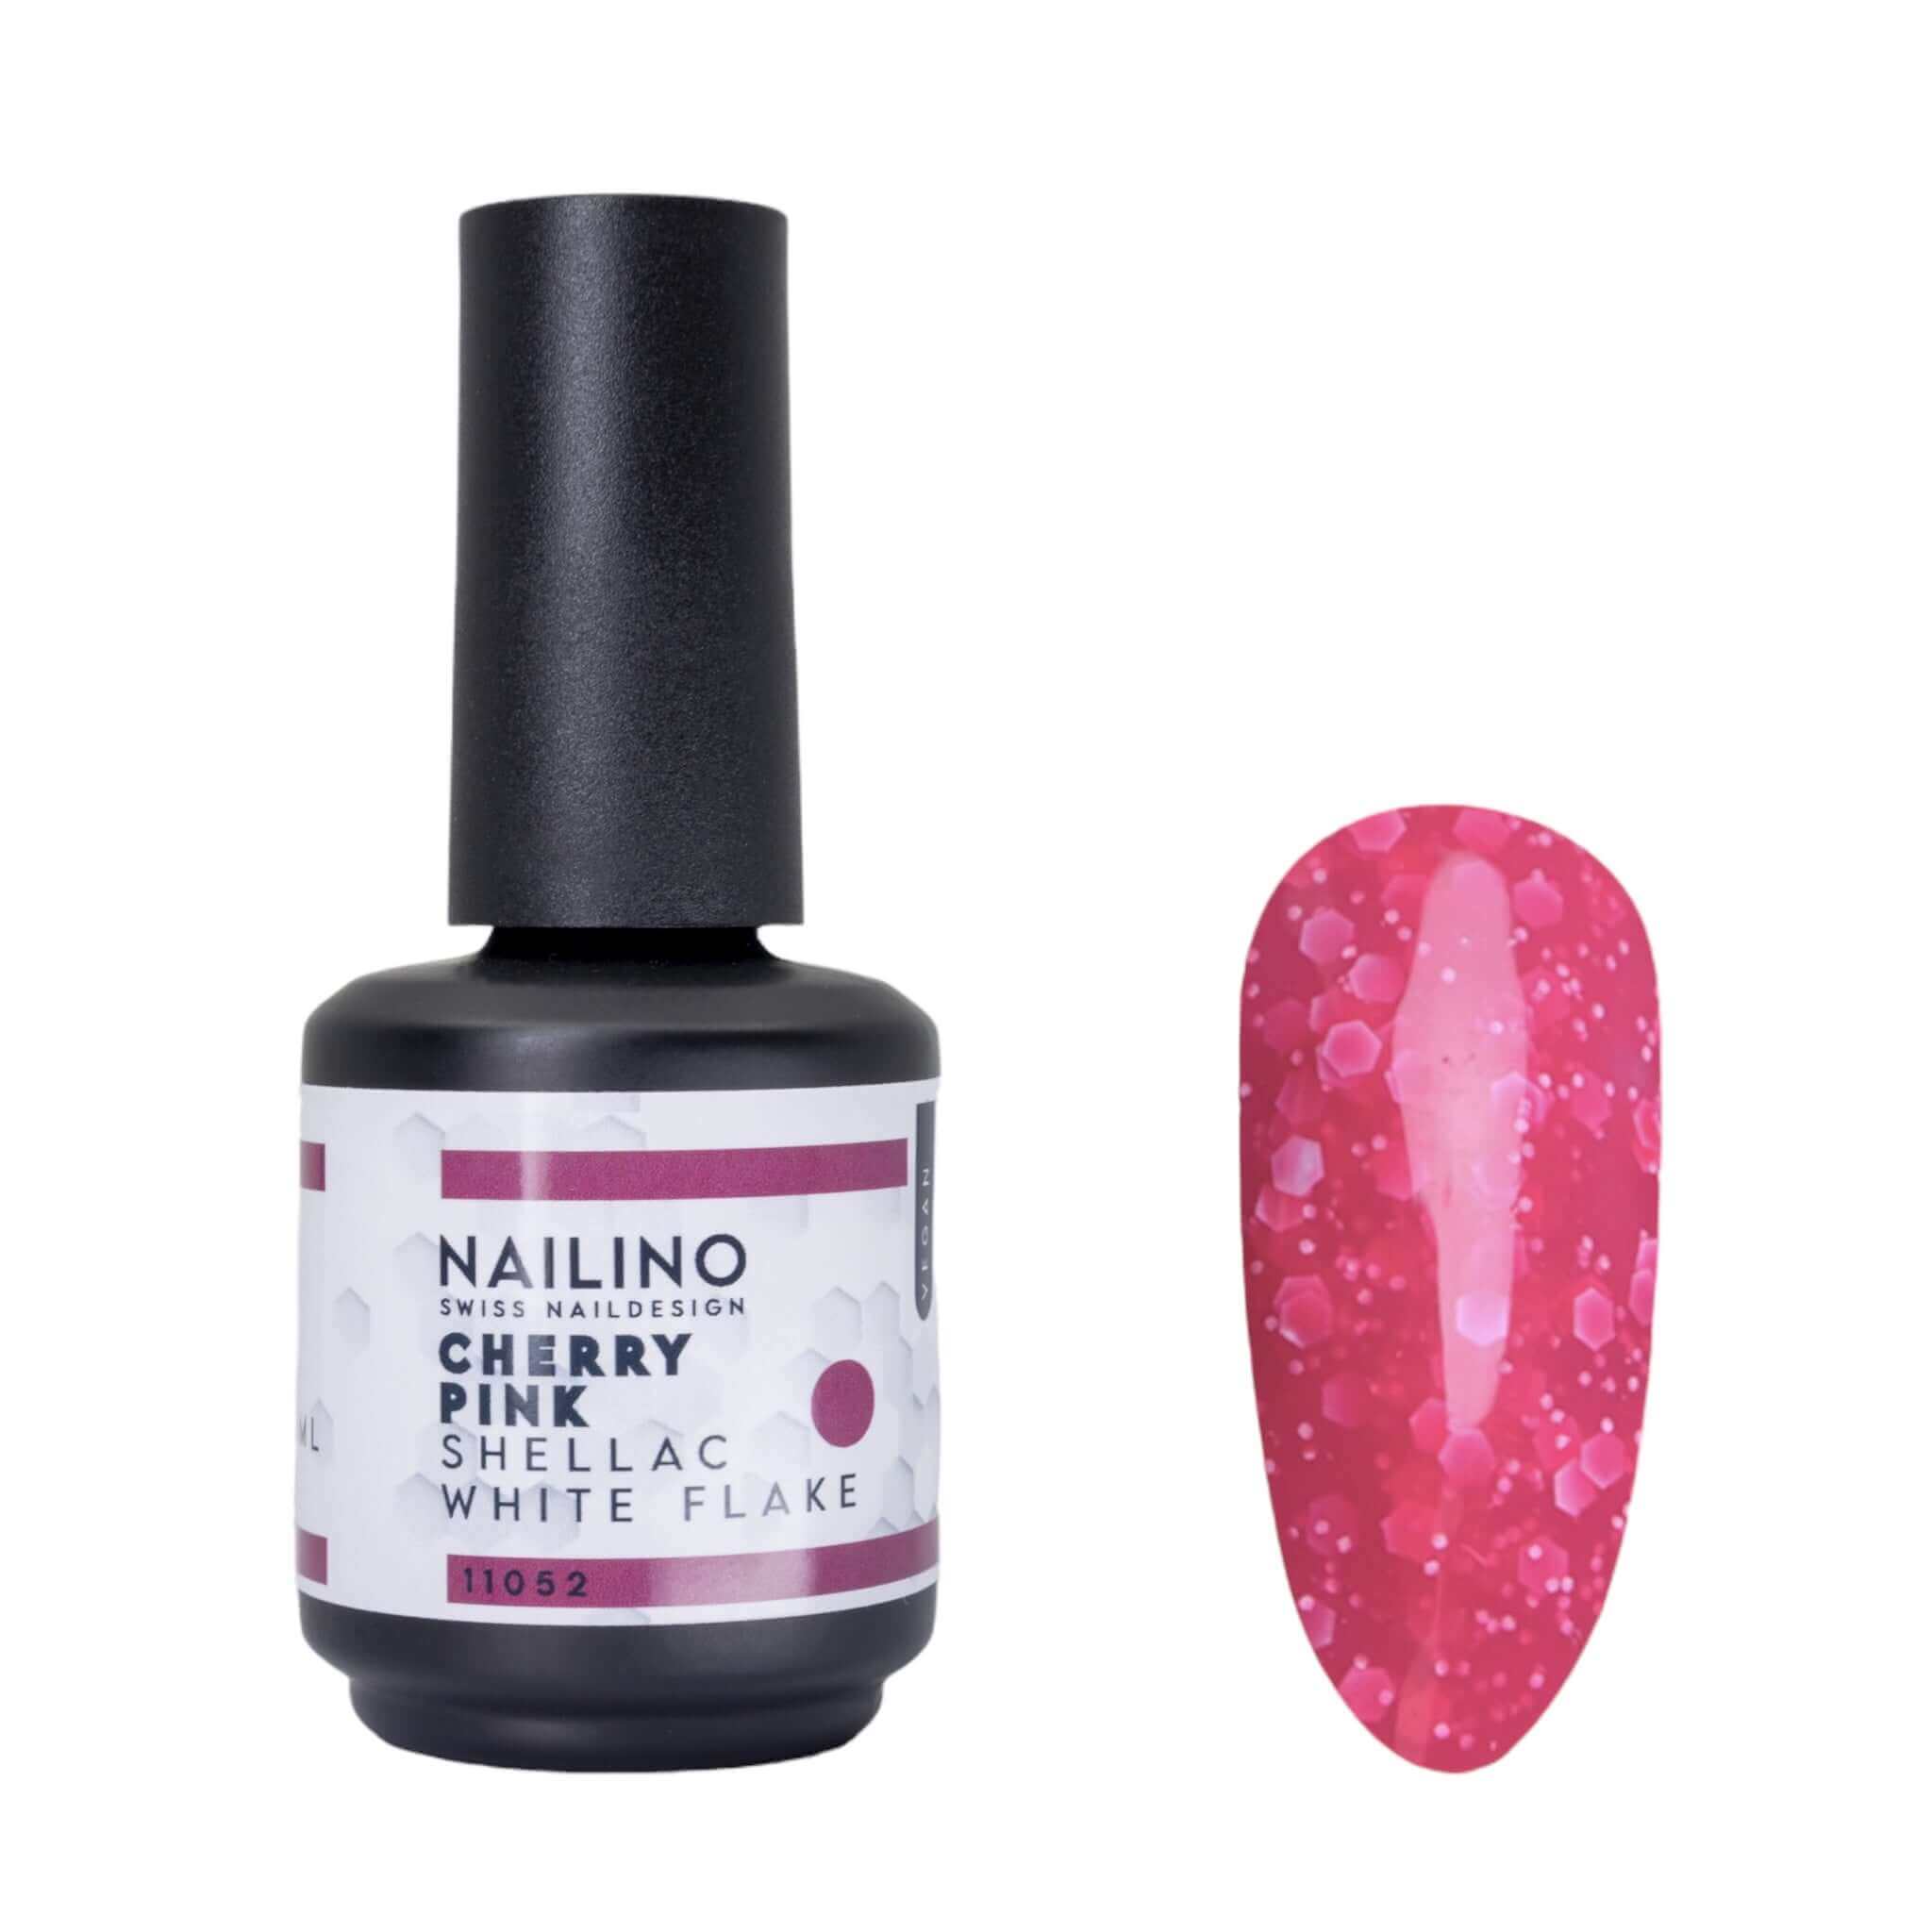 NAILINO Shellac White Flake Cherry Pink Shellac